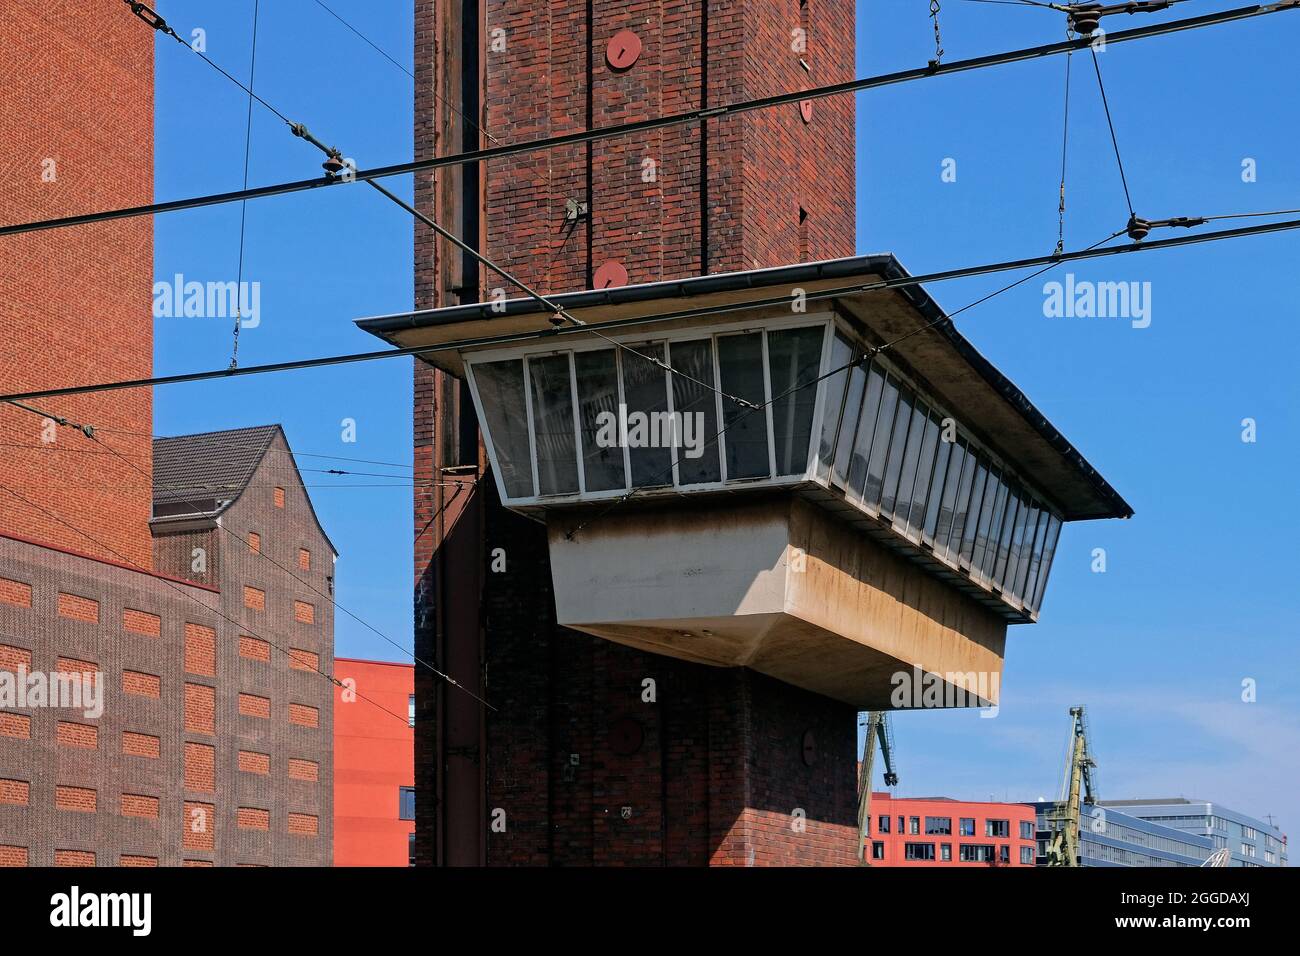 Guard's house in the pier of the Schwanentorbrücke, a lift bridge over Duisburg's inner harbour. Stock Photo